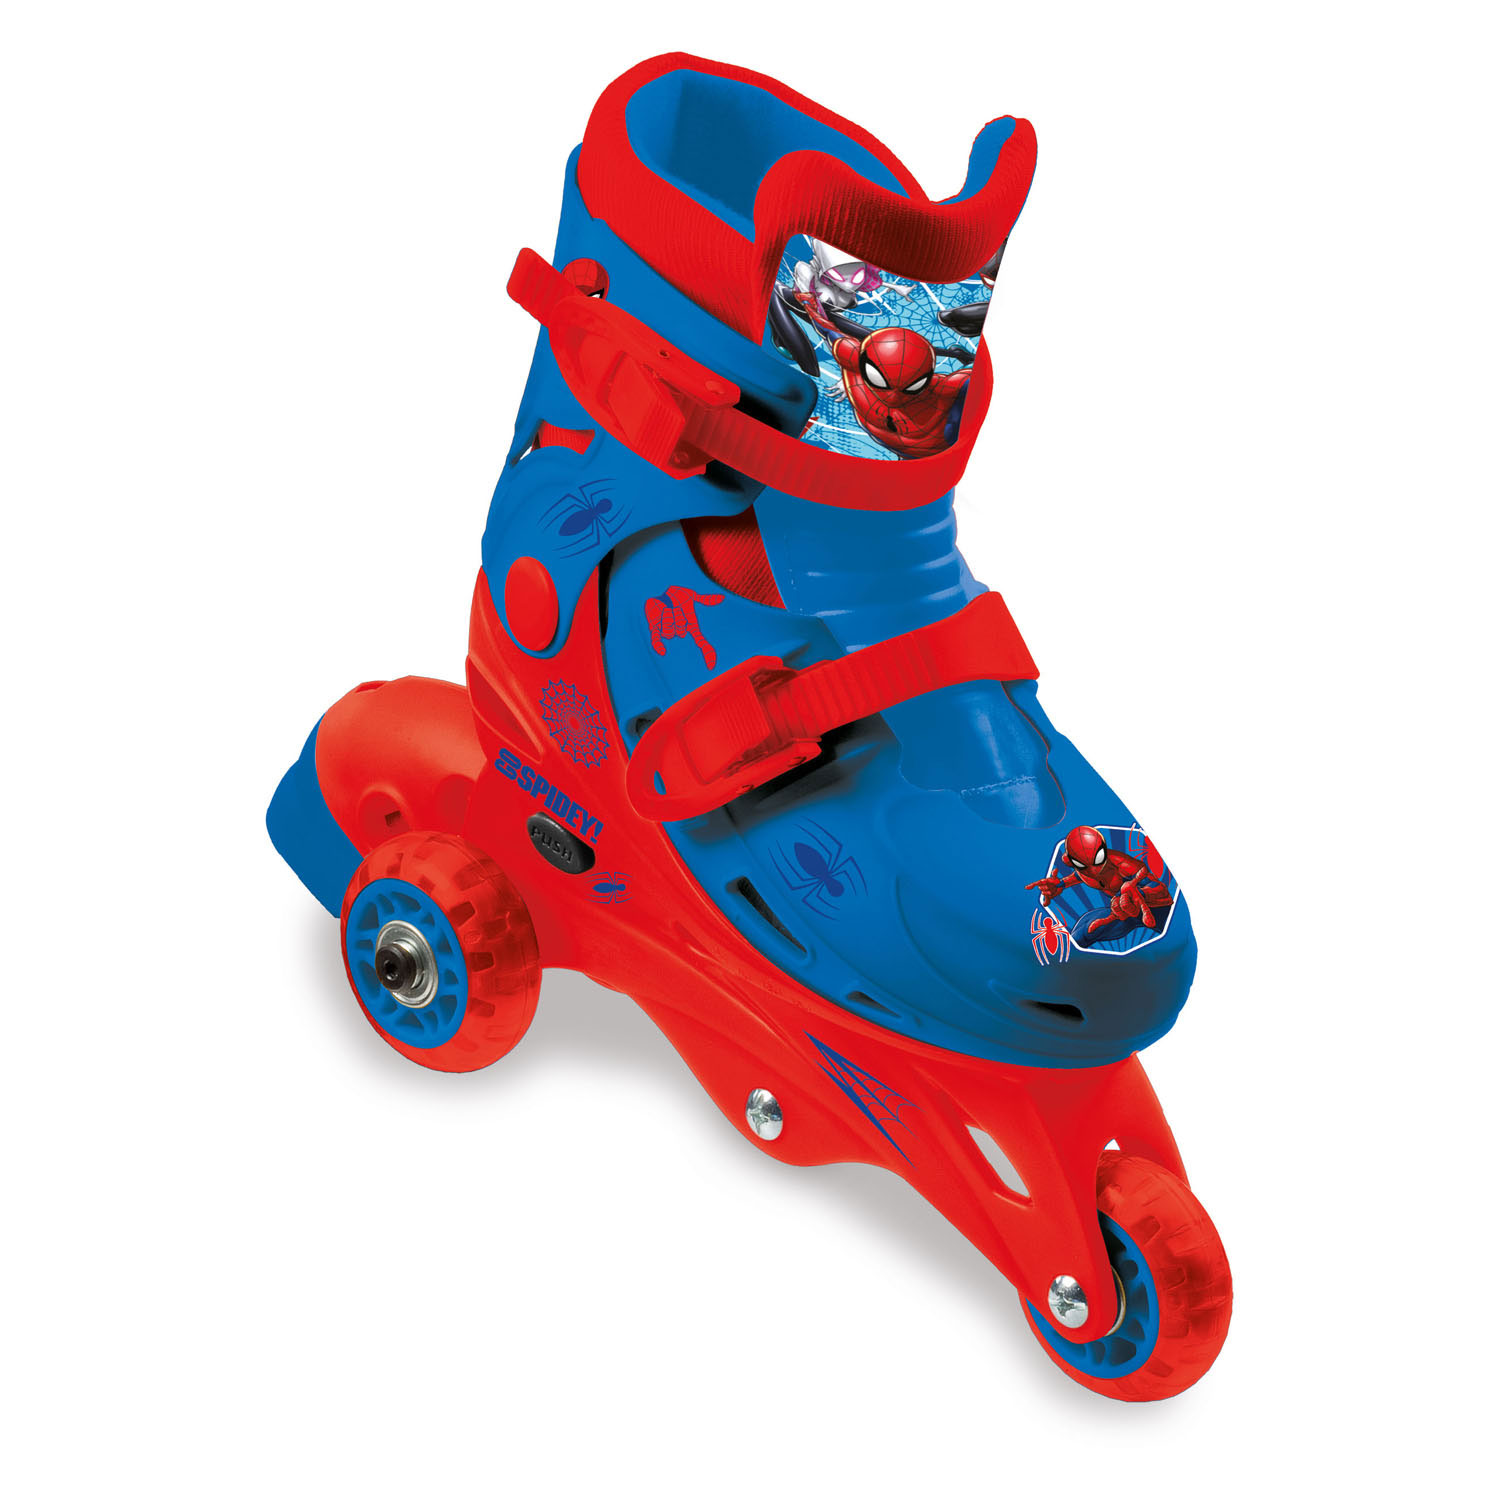 Toymagic - 🕸️ The Spider-Man roller skate set is